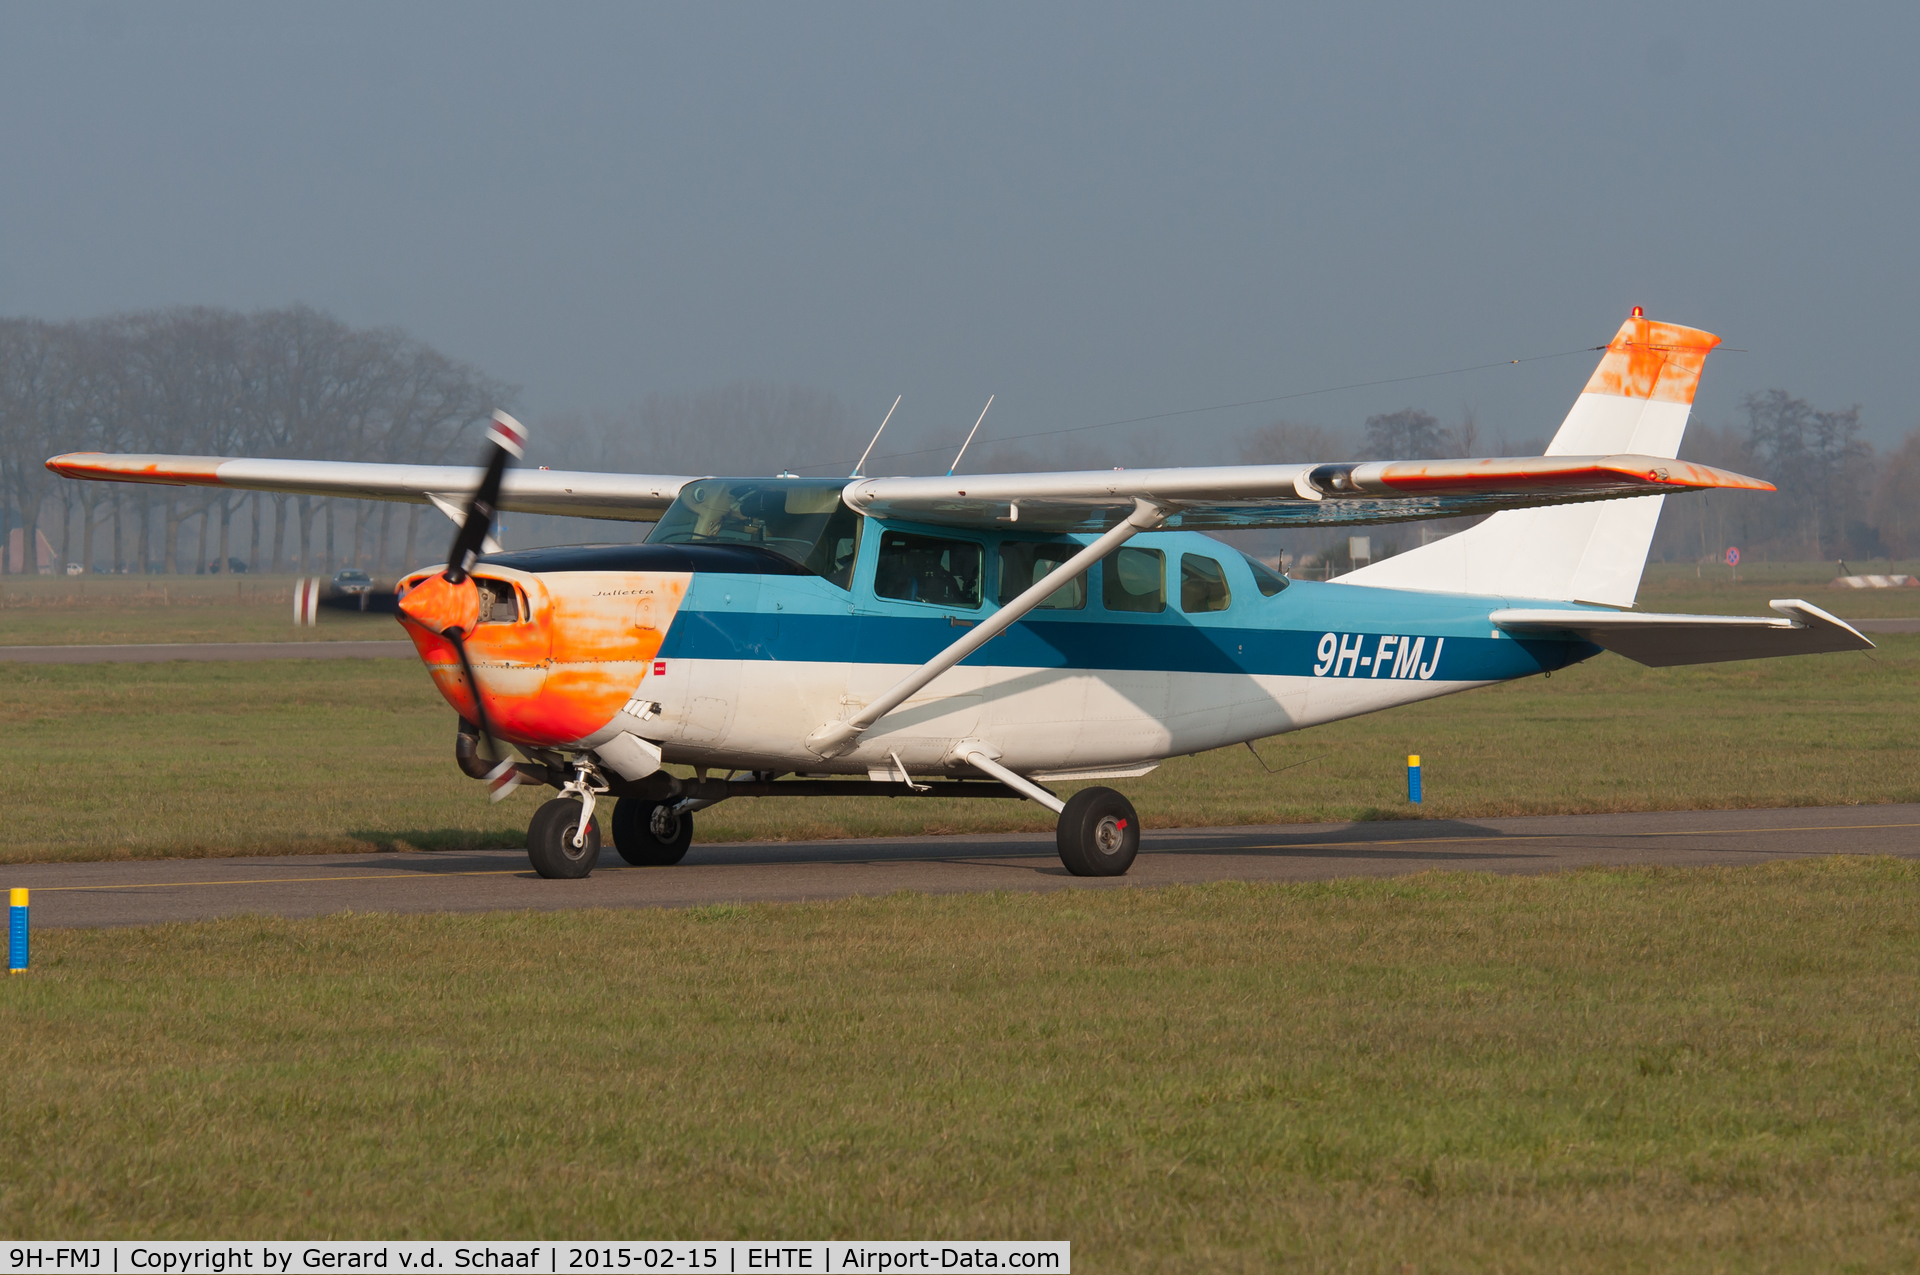 9H-FMJ, 1980 Cessna T207A Turbo Skywagon 8 C/N 20700590, Teuge, Februari 2015